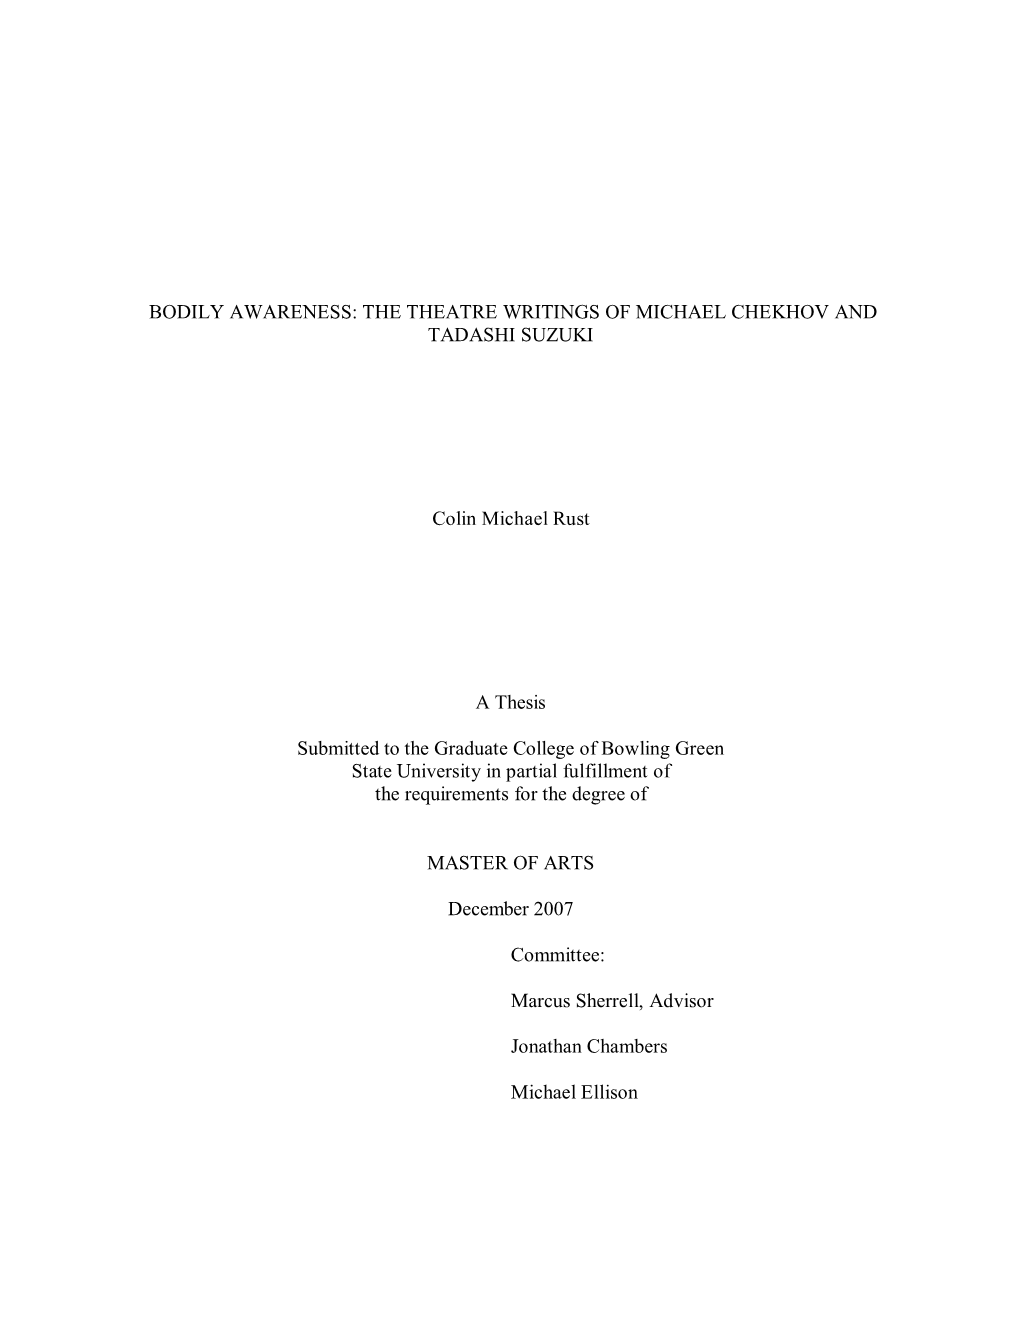 The Theatre Writings of Michael Chekhov and Tadashi Suzuki